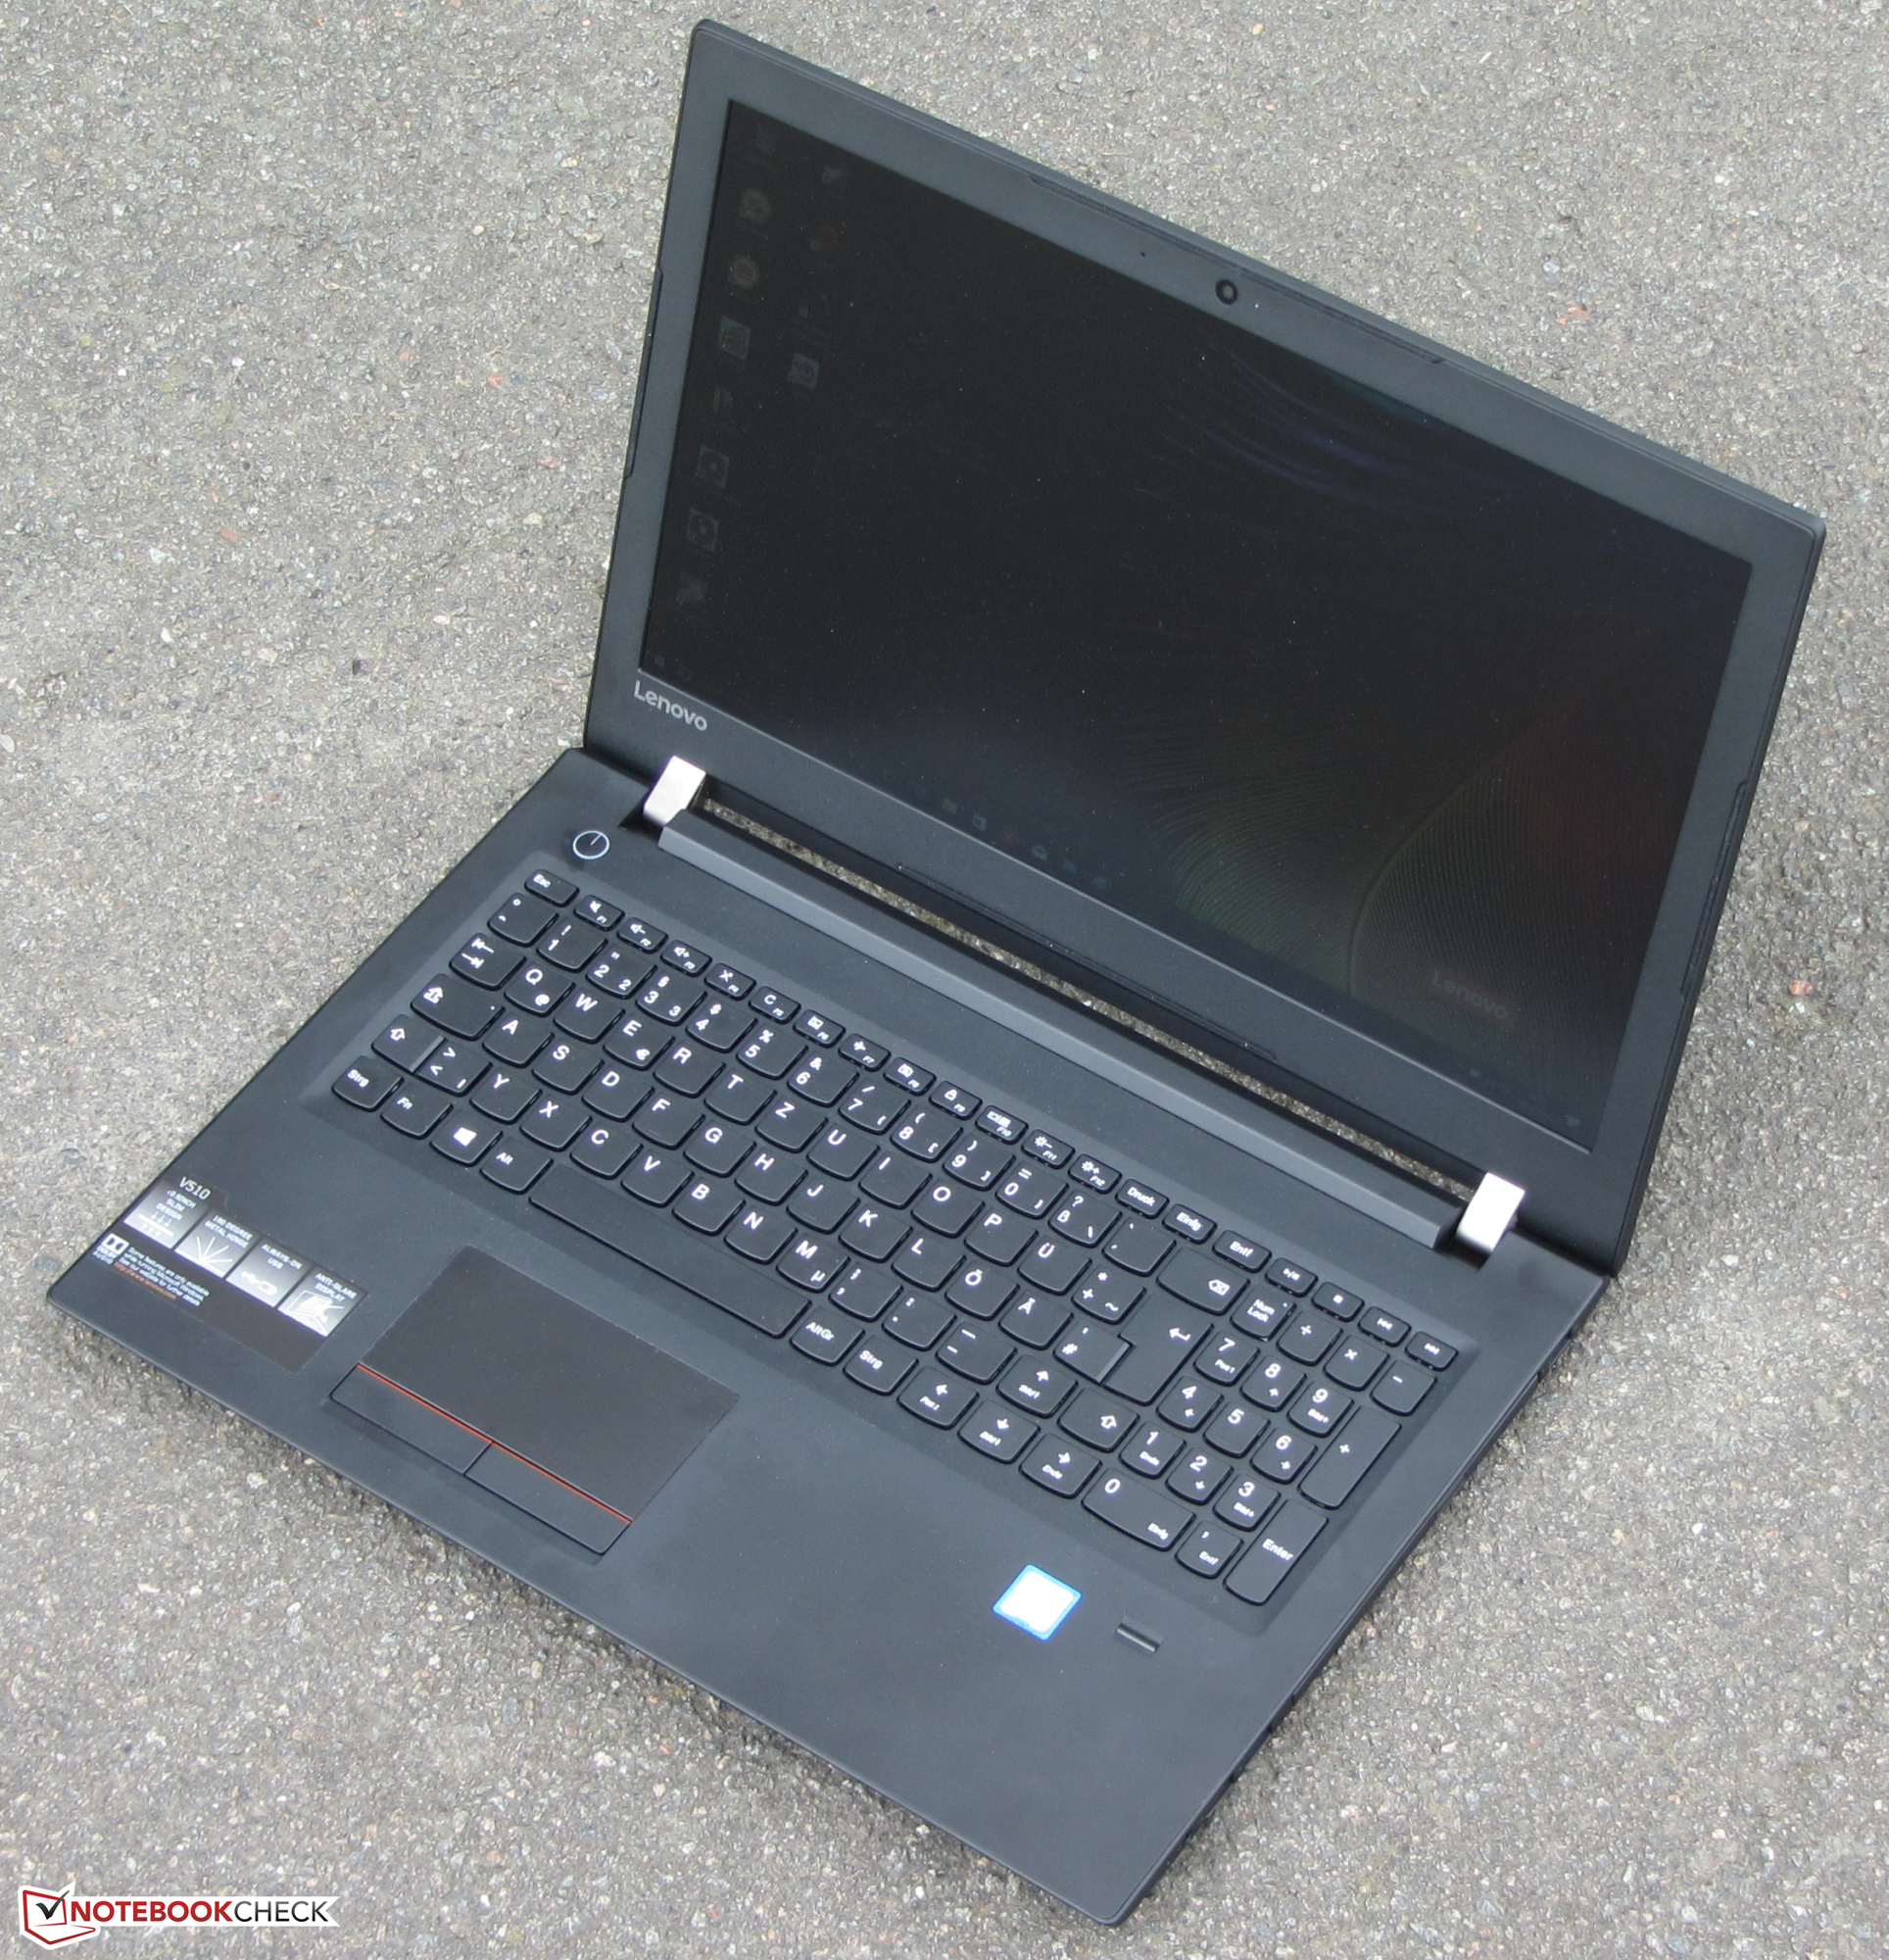 Lenovo V510-15IKB (7200U, Full-HD) Laptop Review - NotebookCheck.net Reviews